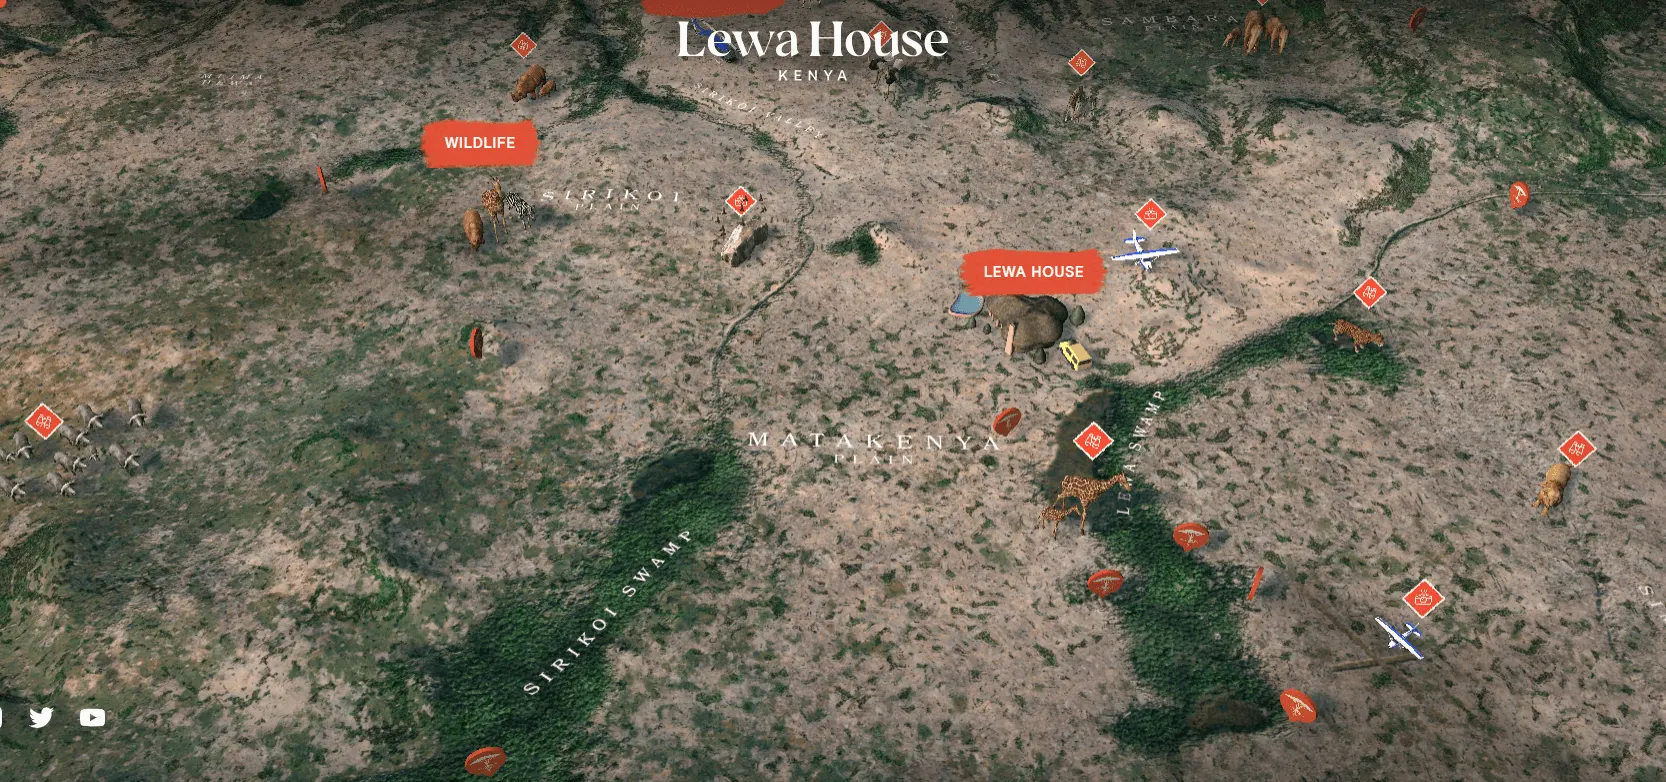  Lewa House Wildlife Map